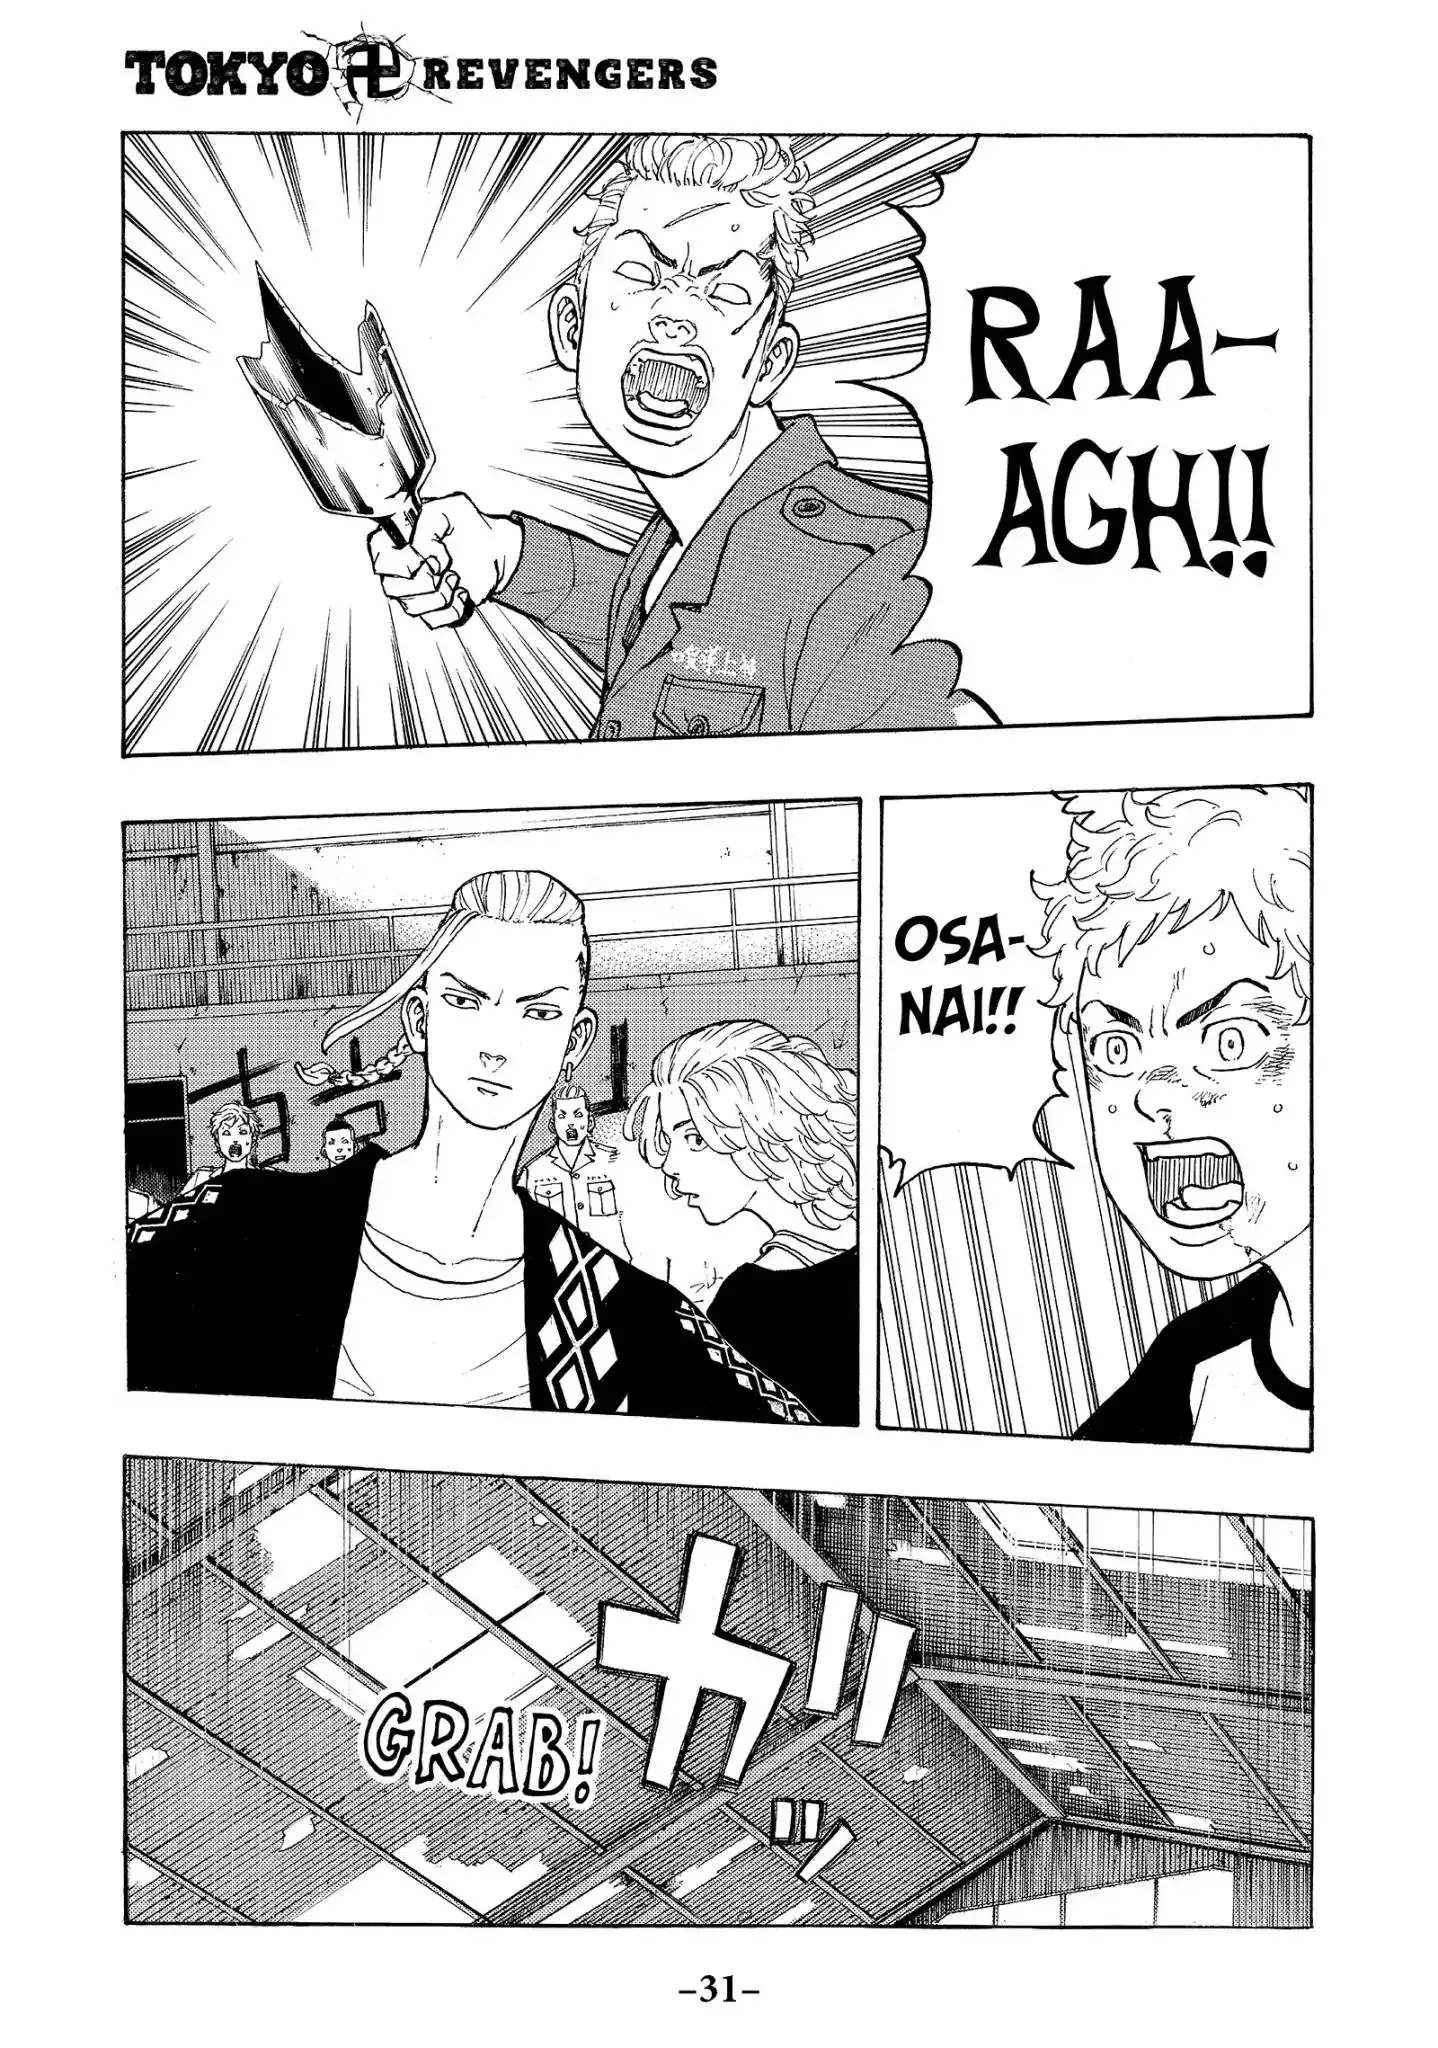 Tokyo Manji Revengers - 16 page 1